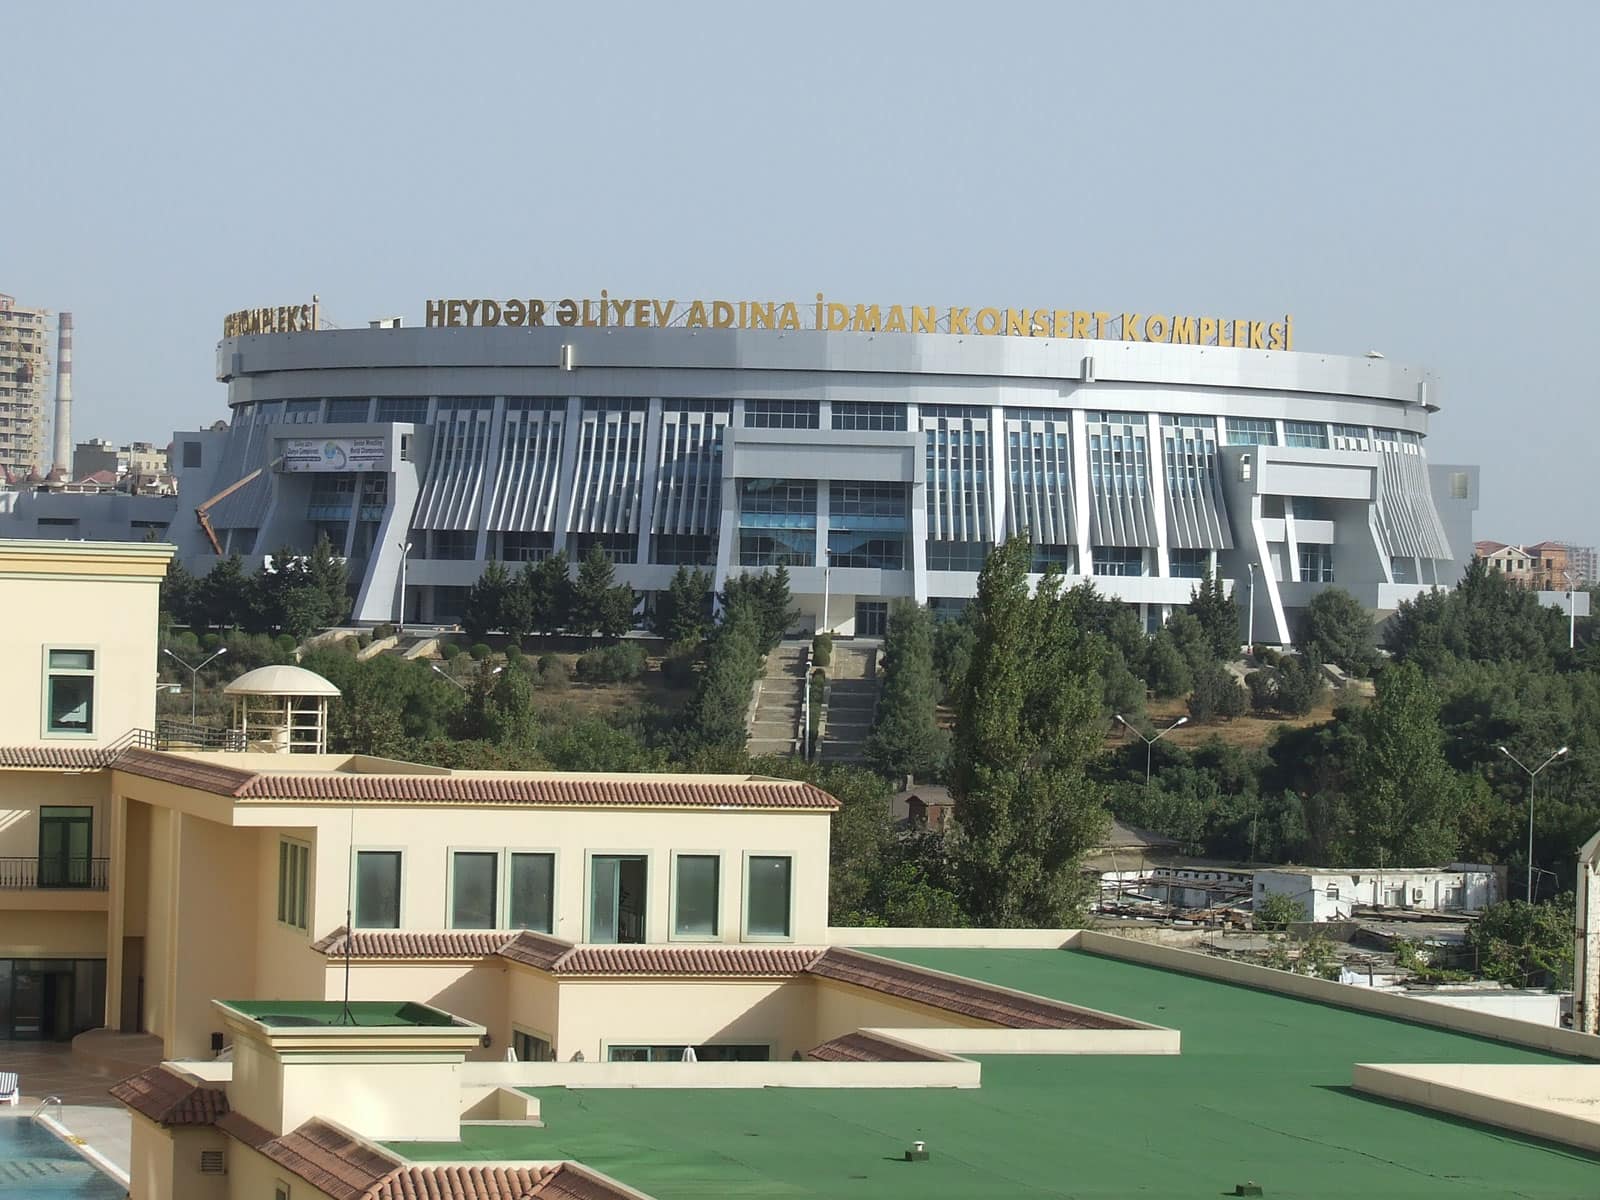 Heydar Aliyev stadium, one of the venues for the Baku games, John Connell via flickr